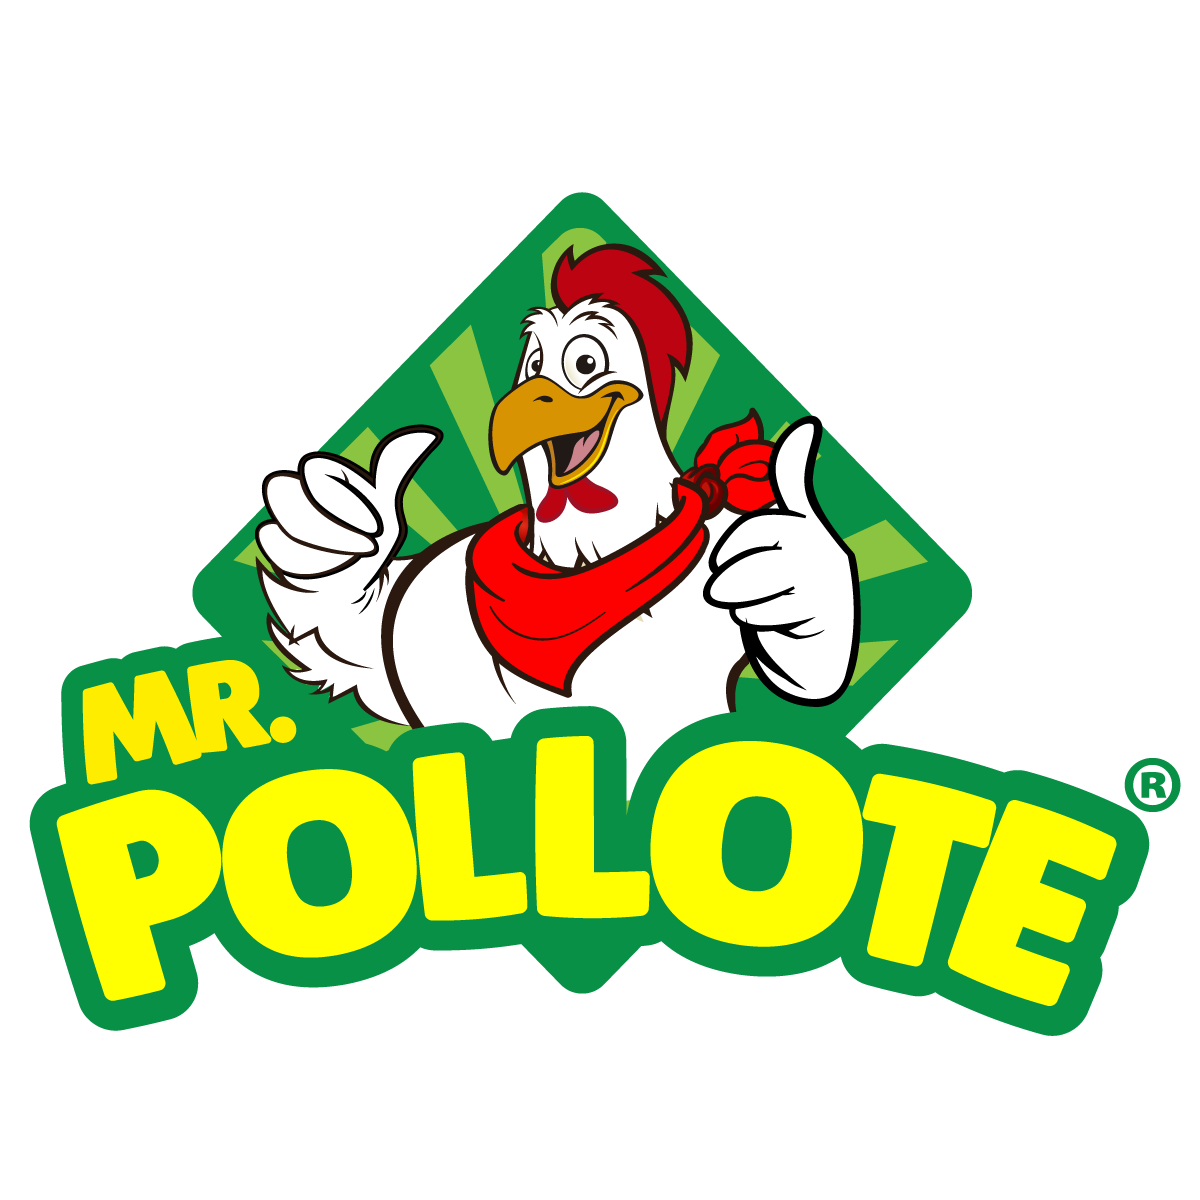 Mr. Pollote Logo